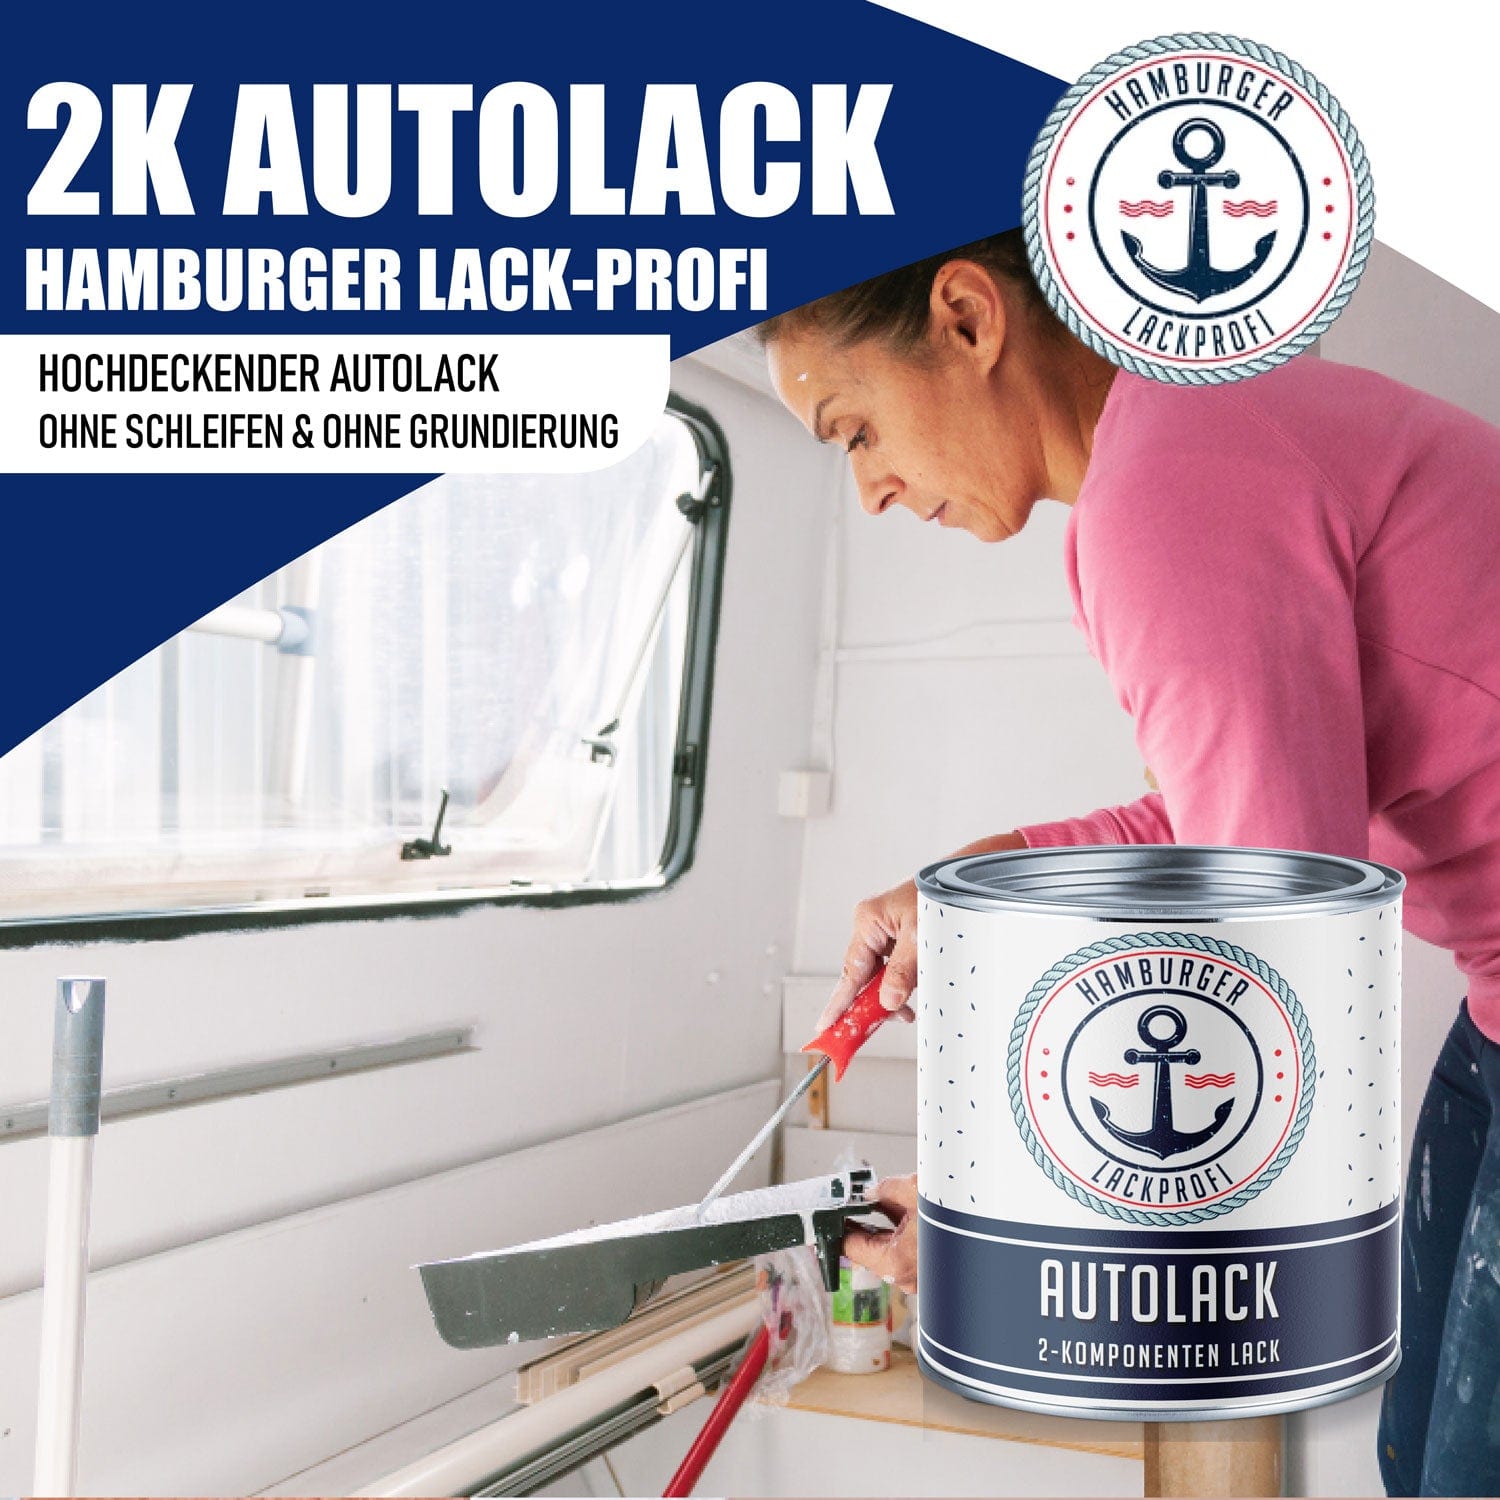 Hamburger Lack-Profi Lacke & Beschichtungen Hamburger Lack-Profi 2K Autolack in Staubgrau RAL 7037 mit Lackierset (X300) & Verdünnung (1 L) - 30% Sparangebot